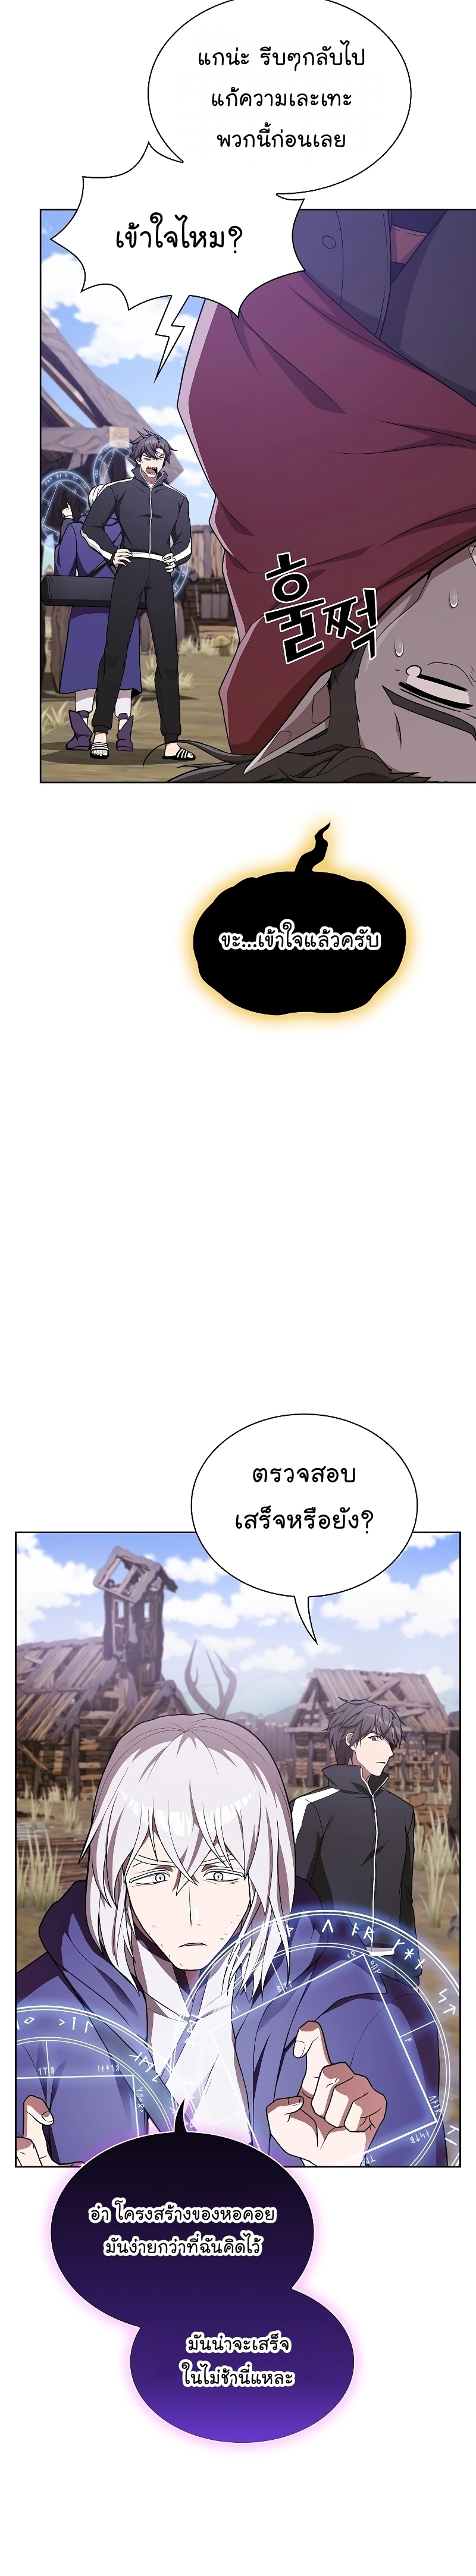 The Tutorial Towel Manga Manhwa Wei 179 (19)